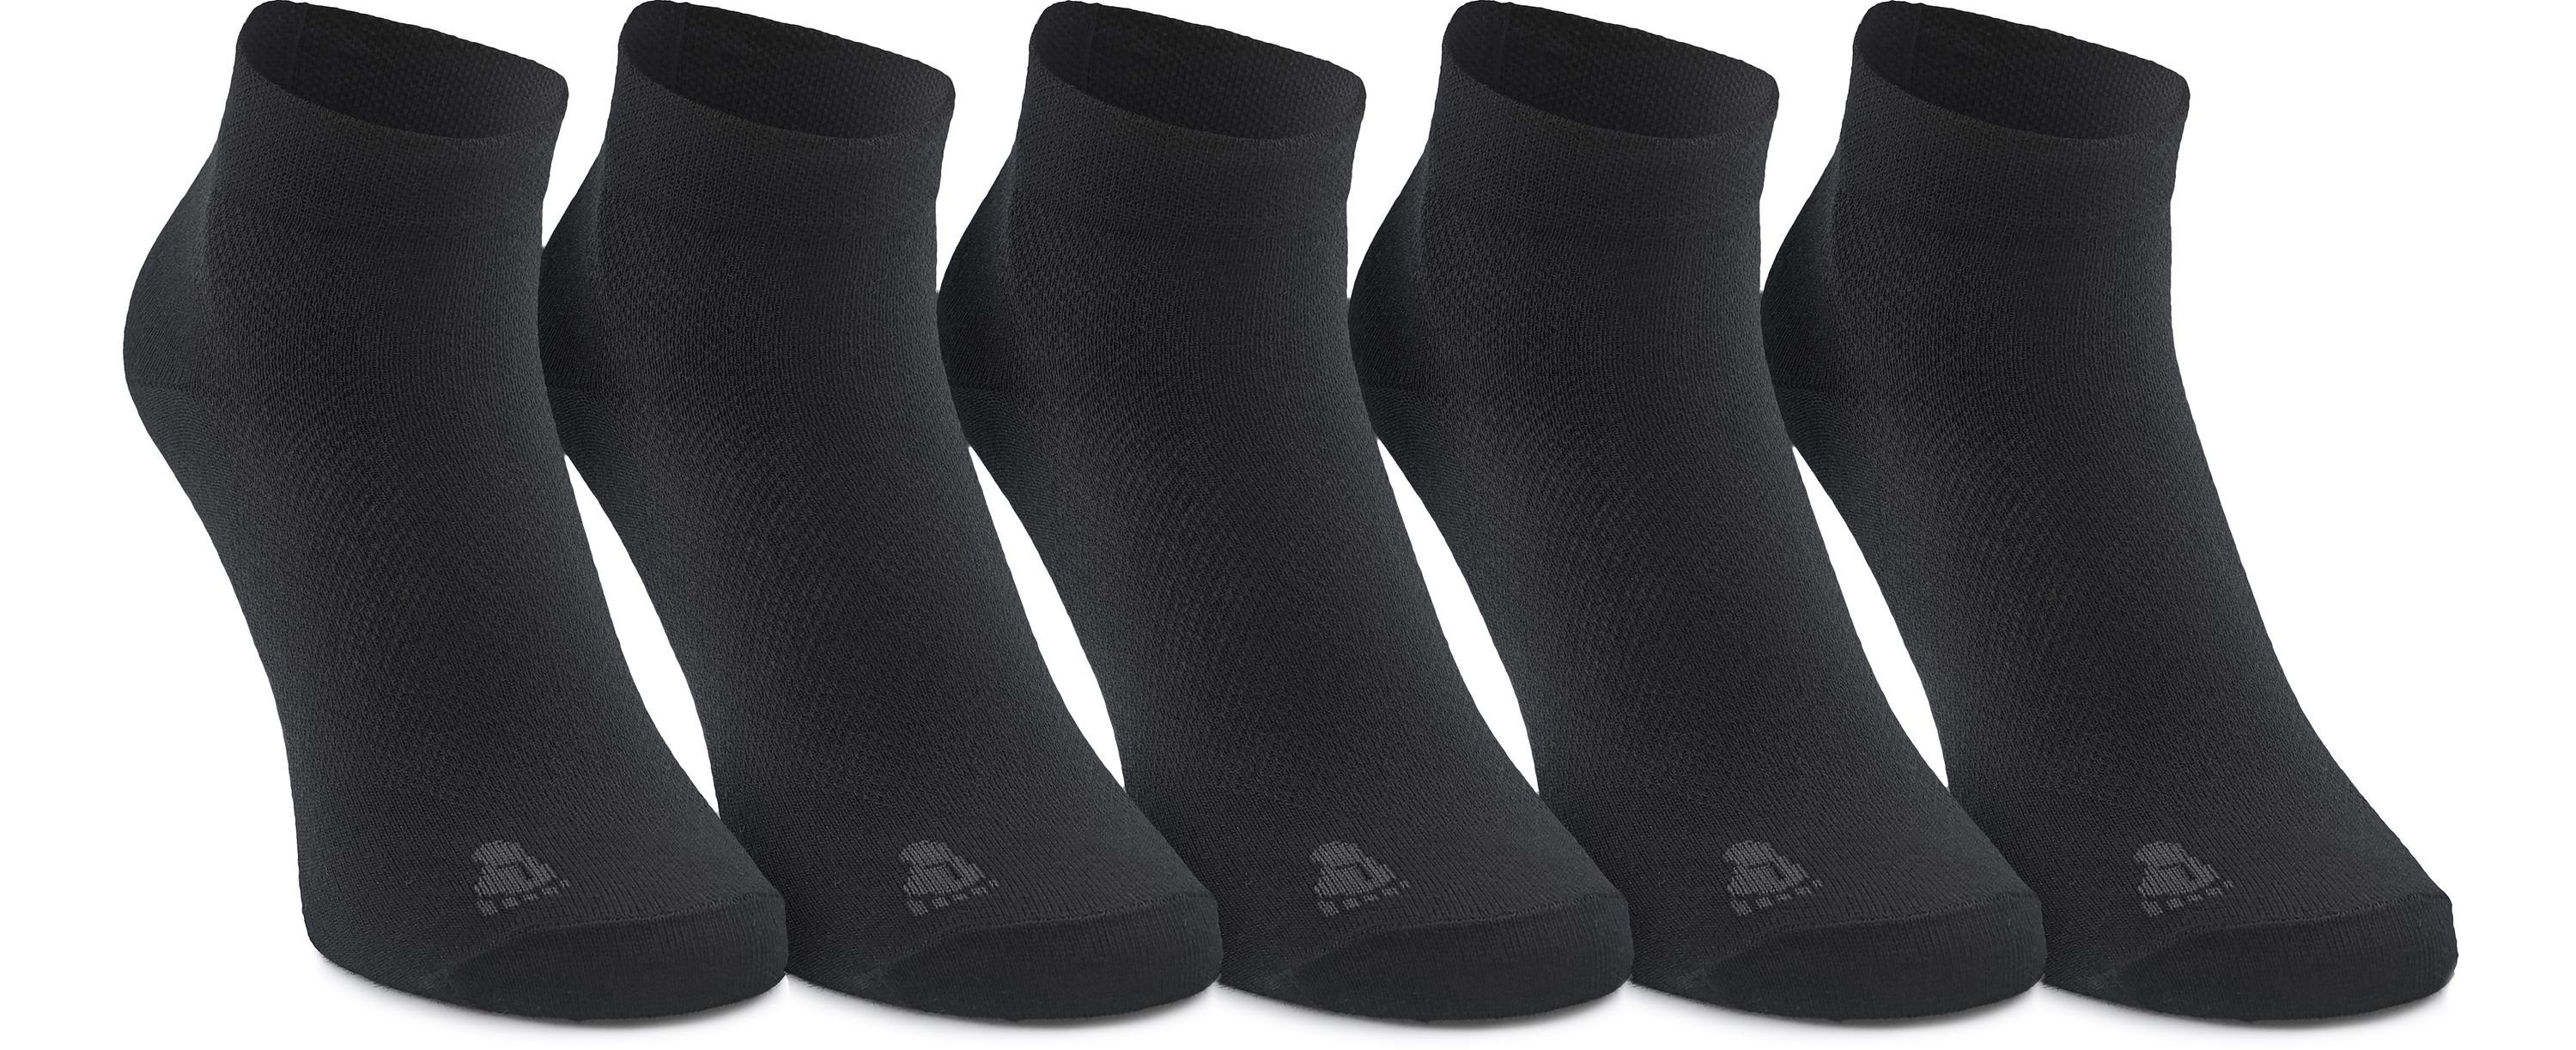 Ladeheid Socken Unisex 5 Pack Socken aus Baumwolle LASS0002 Schwarz